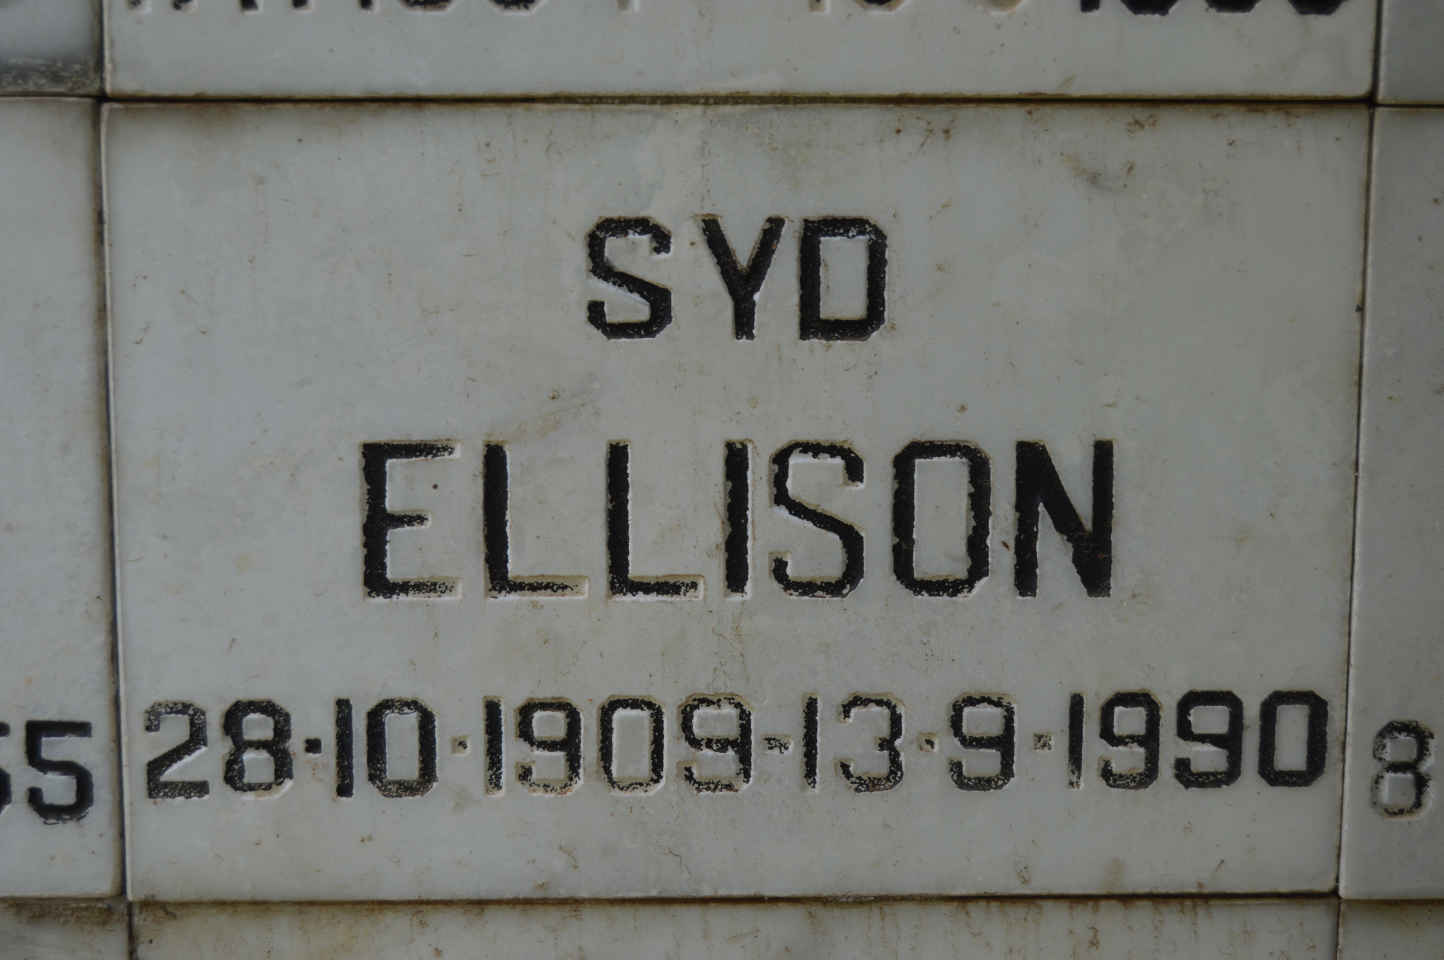 ELLISON Syd 1909-1990